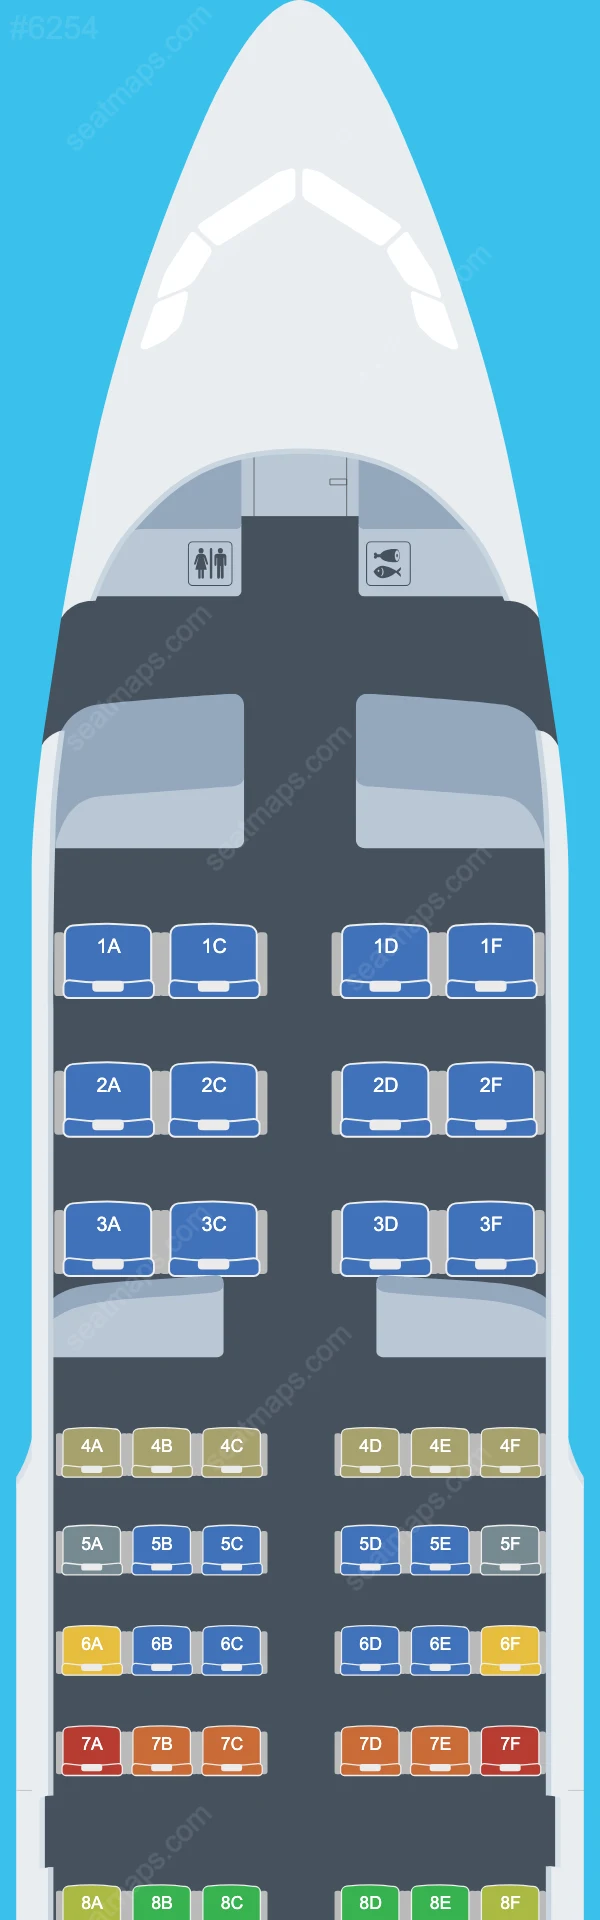 Tunisair Airbus A319 Seat Maps A319-100 V.1